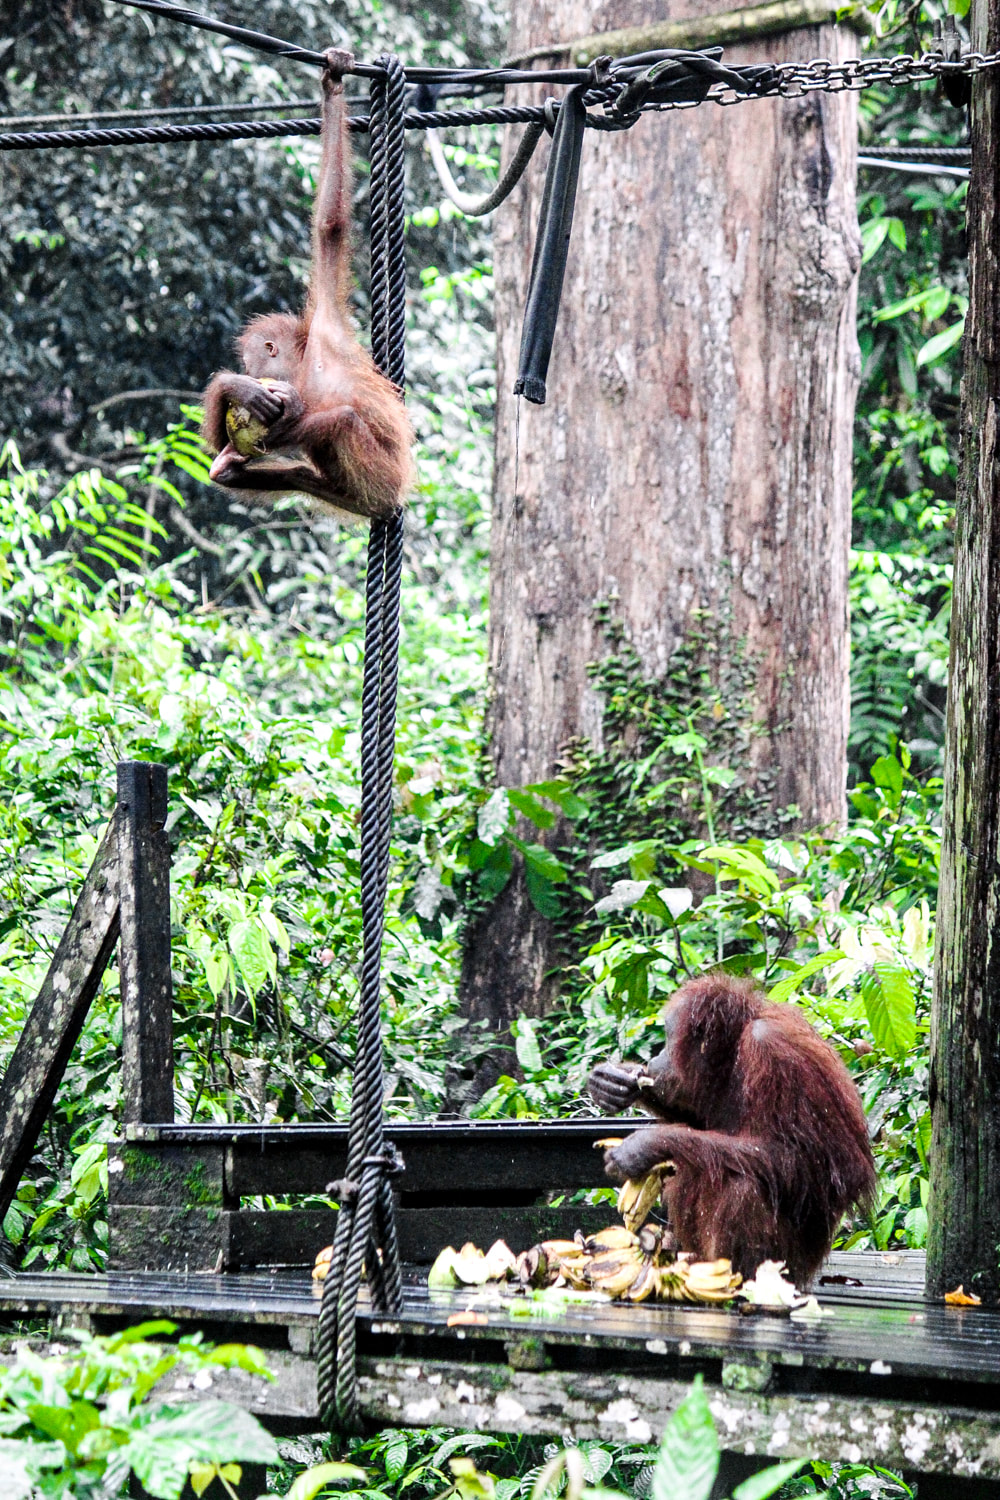 Borneo: The Sepilok Orangutan Rehabilitation Centre. Sabah, Malaysian Borneo - The feeding platform and buddy system.